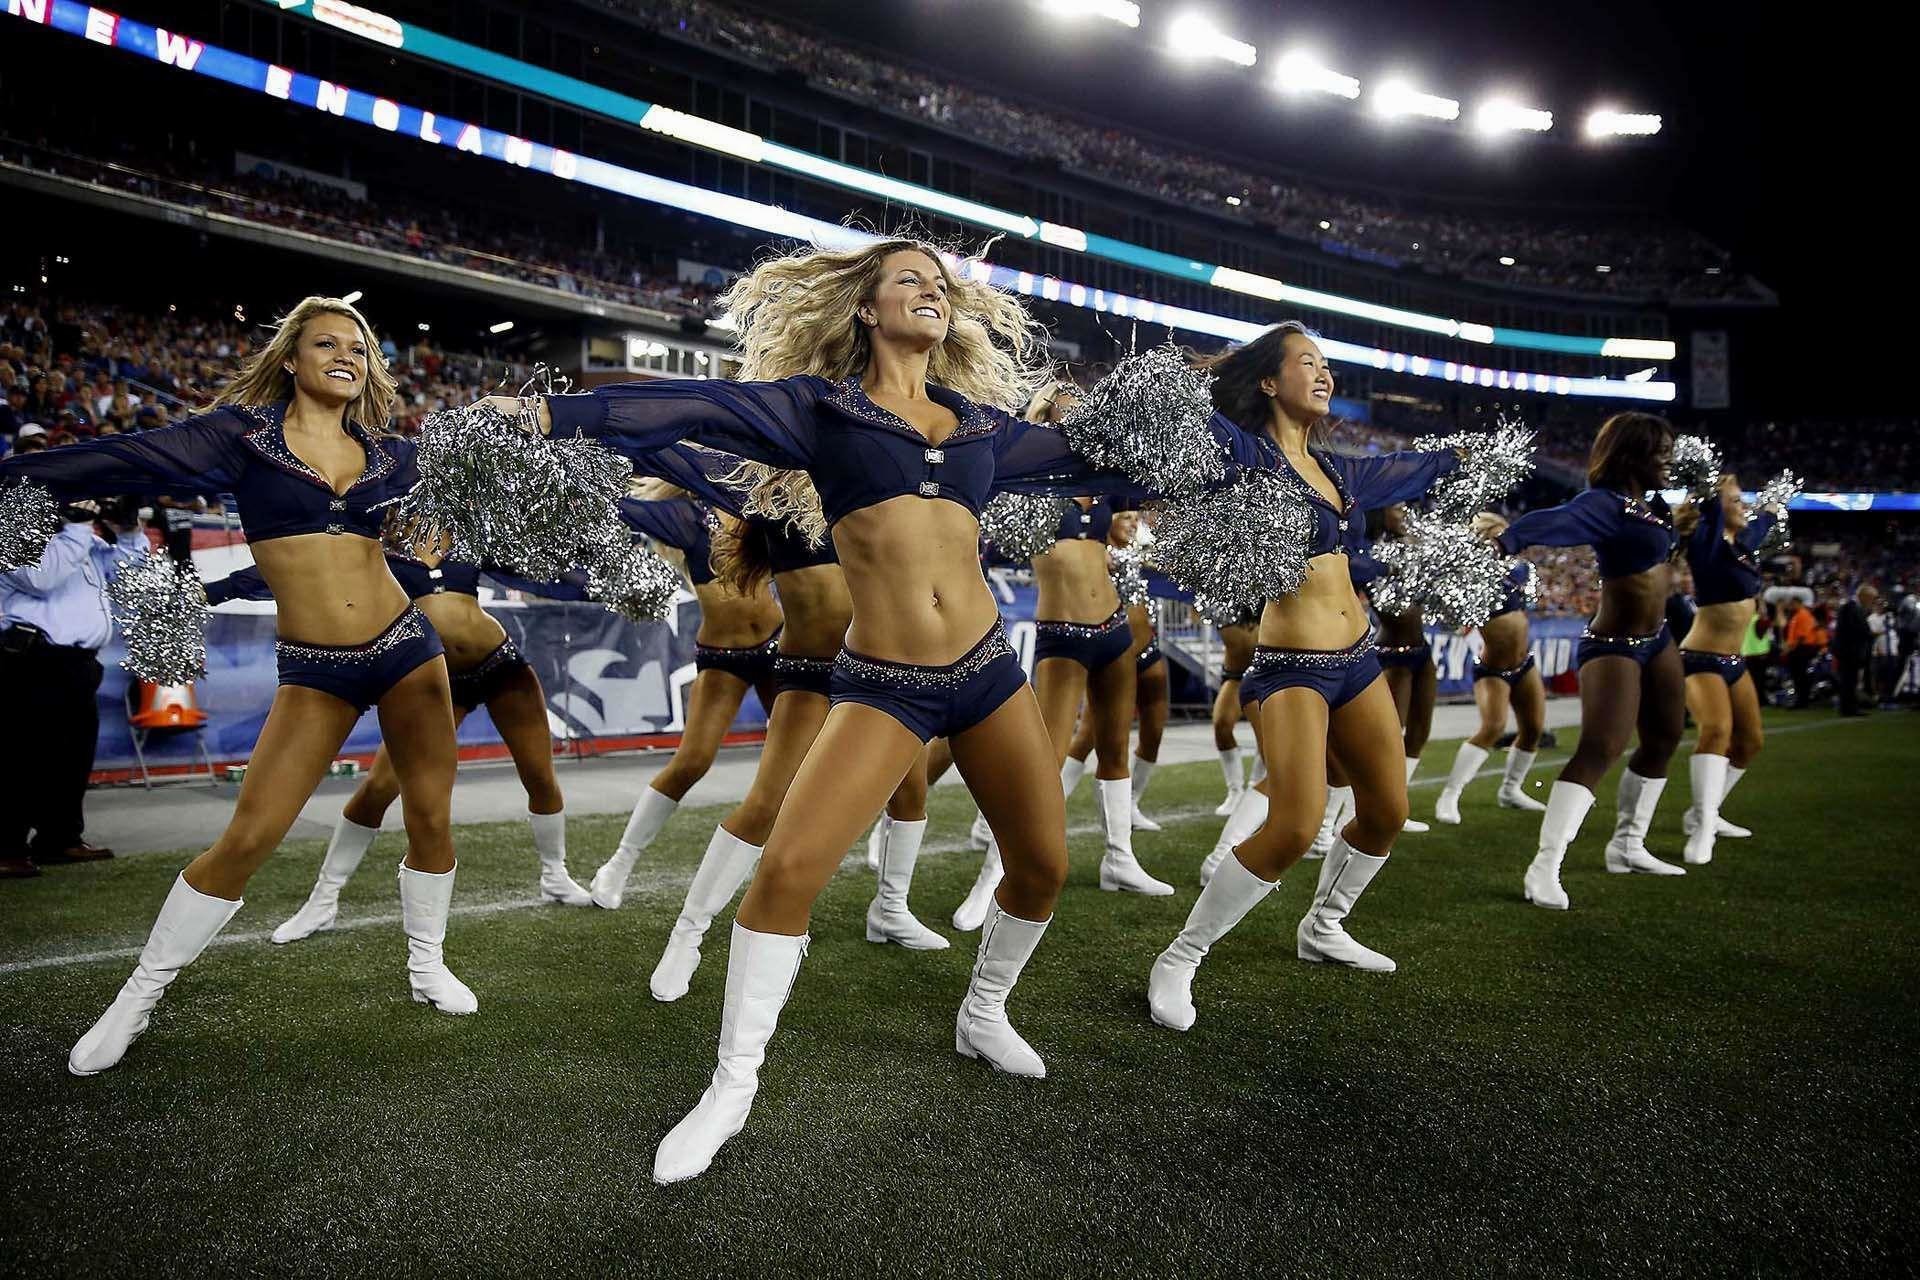 Wallpaper.wiki Free Dallas Cowboys Cheerleaders Picture PIC